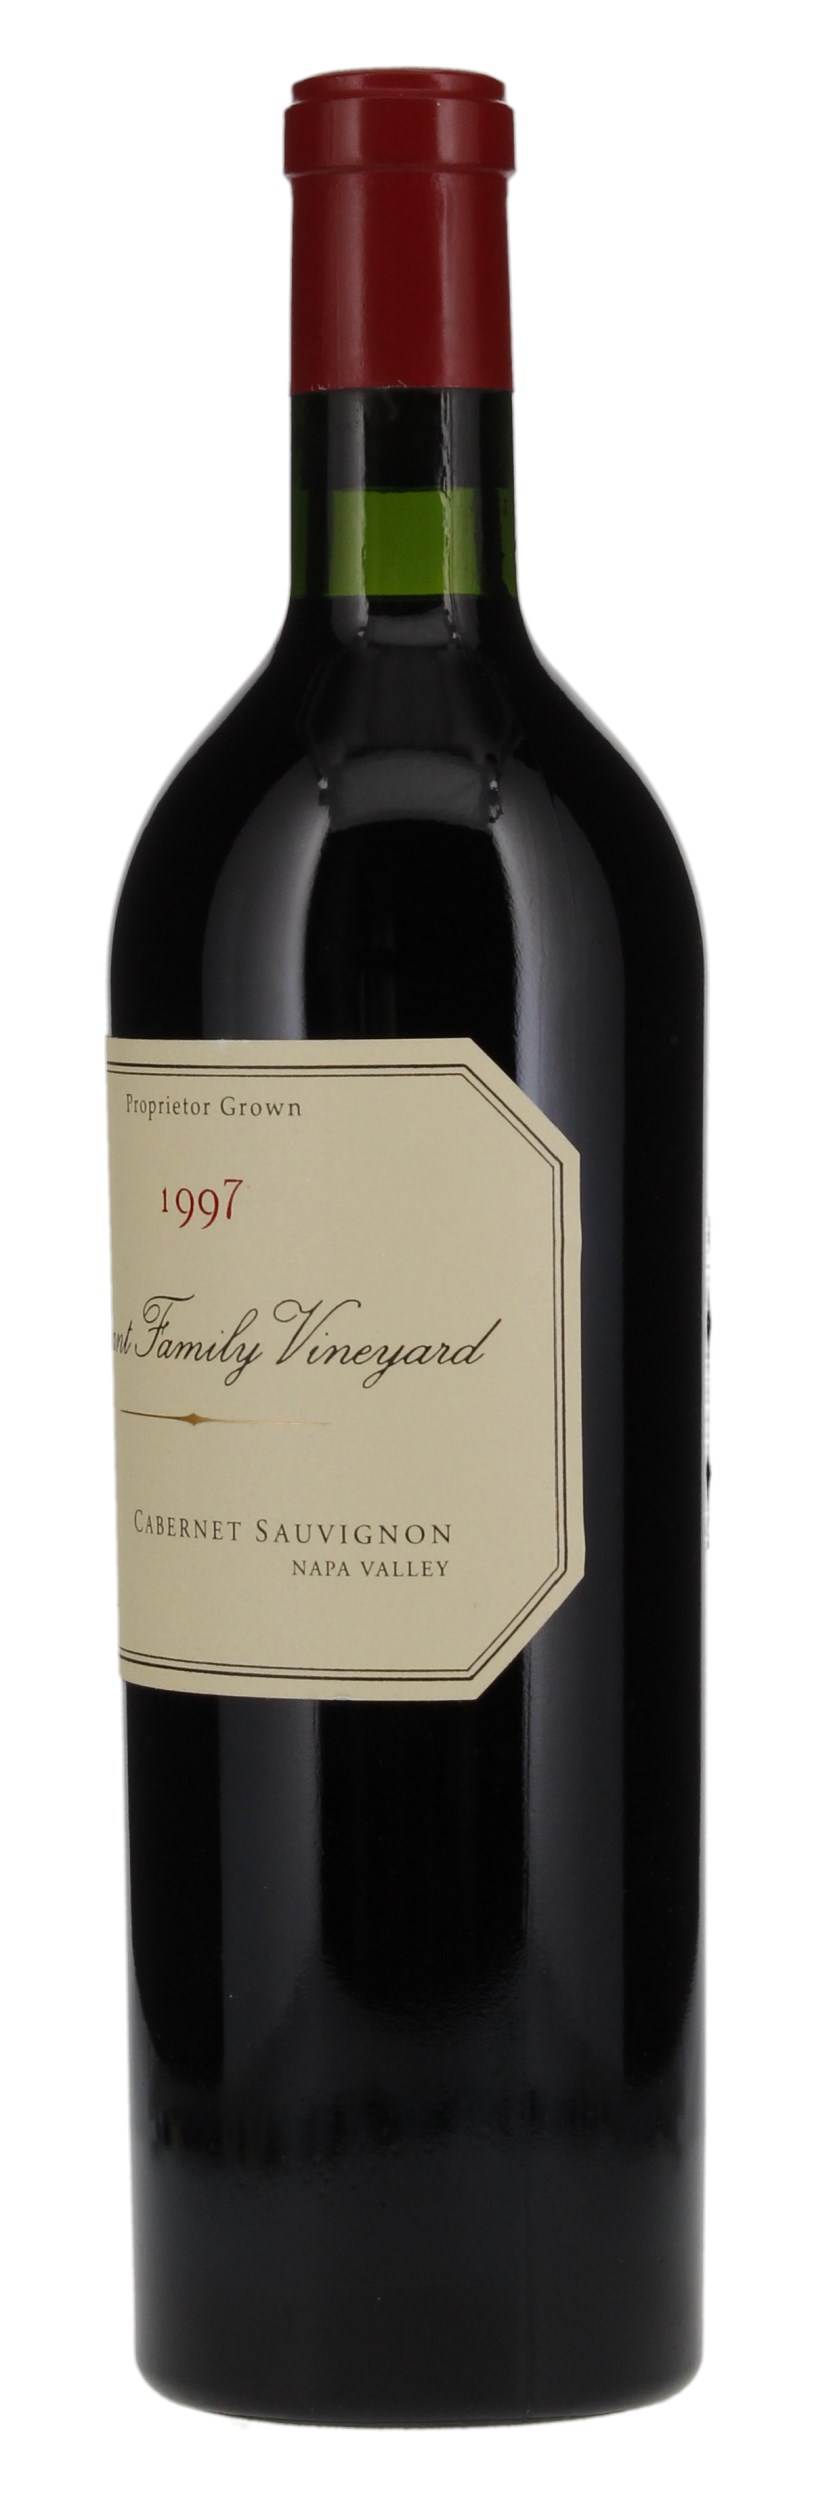 1997 Bryant Family Vineyard Cabernet Sauvignon, 750ml